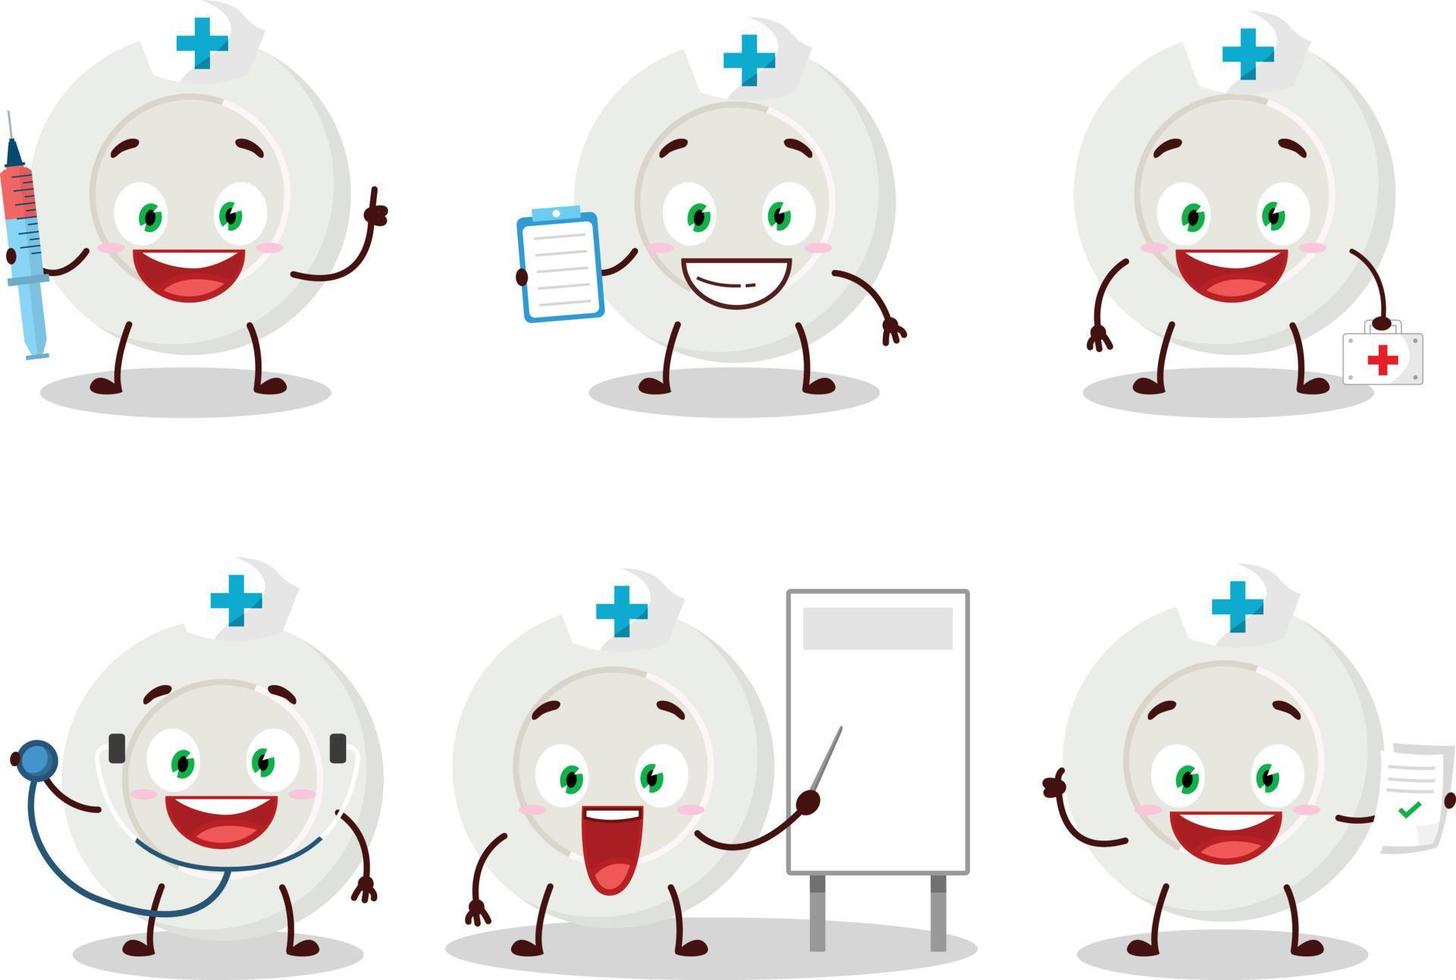 dokter beroep emoticon met bord boos uitdrukking tekenfilm karakter vector